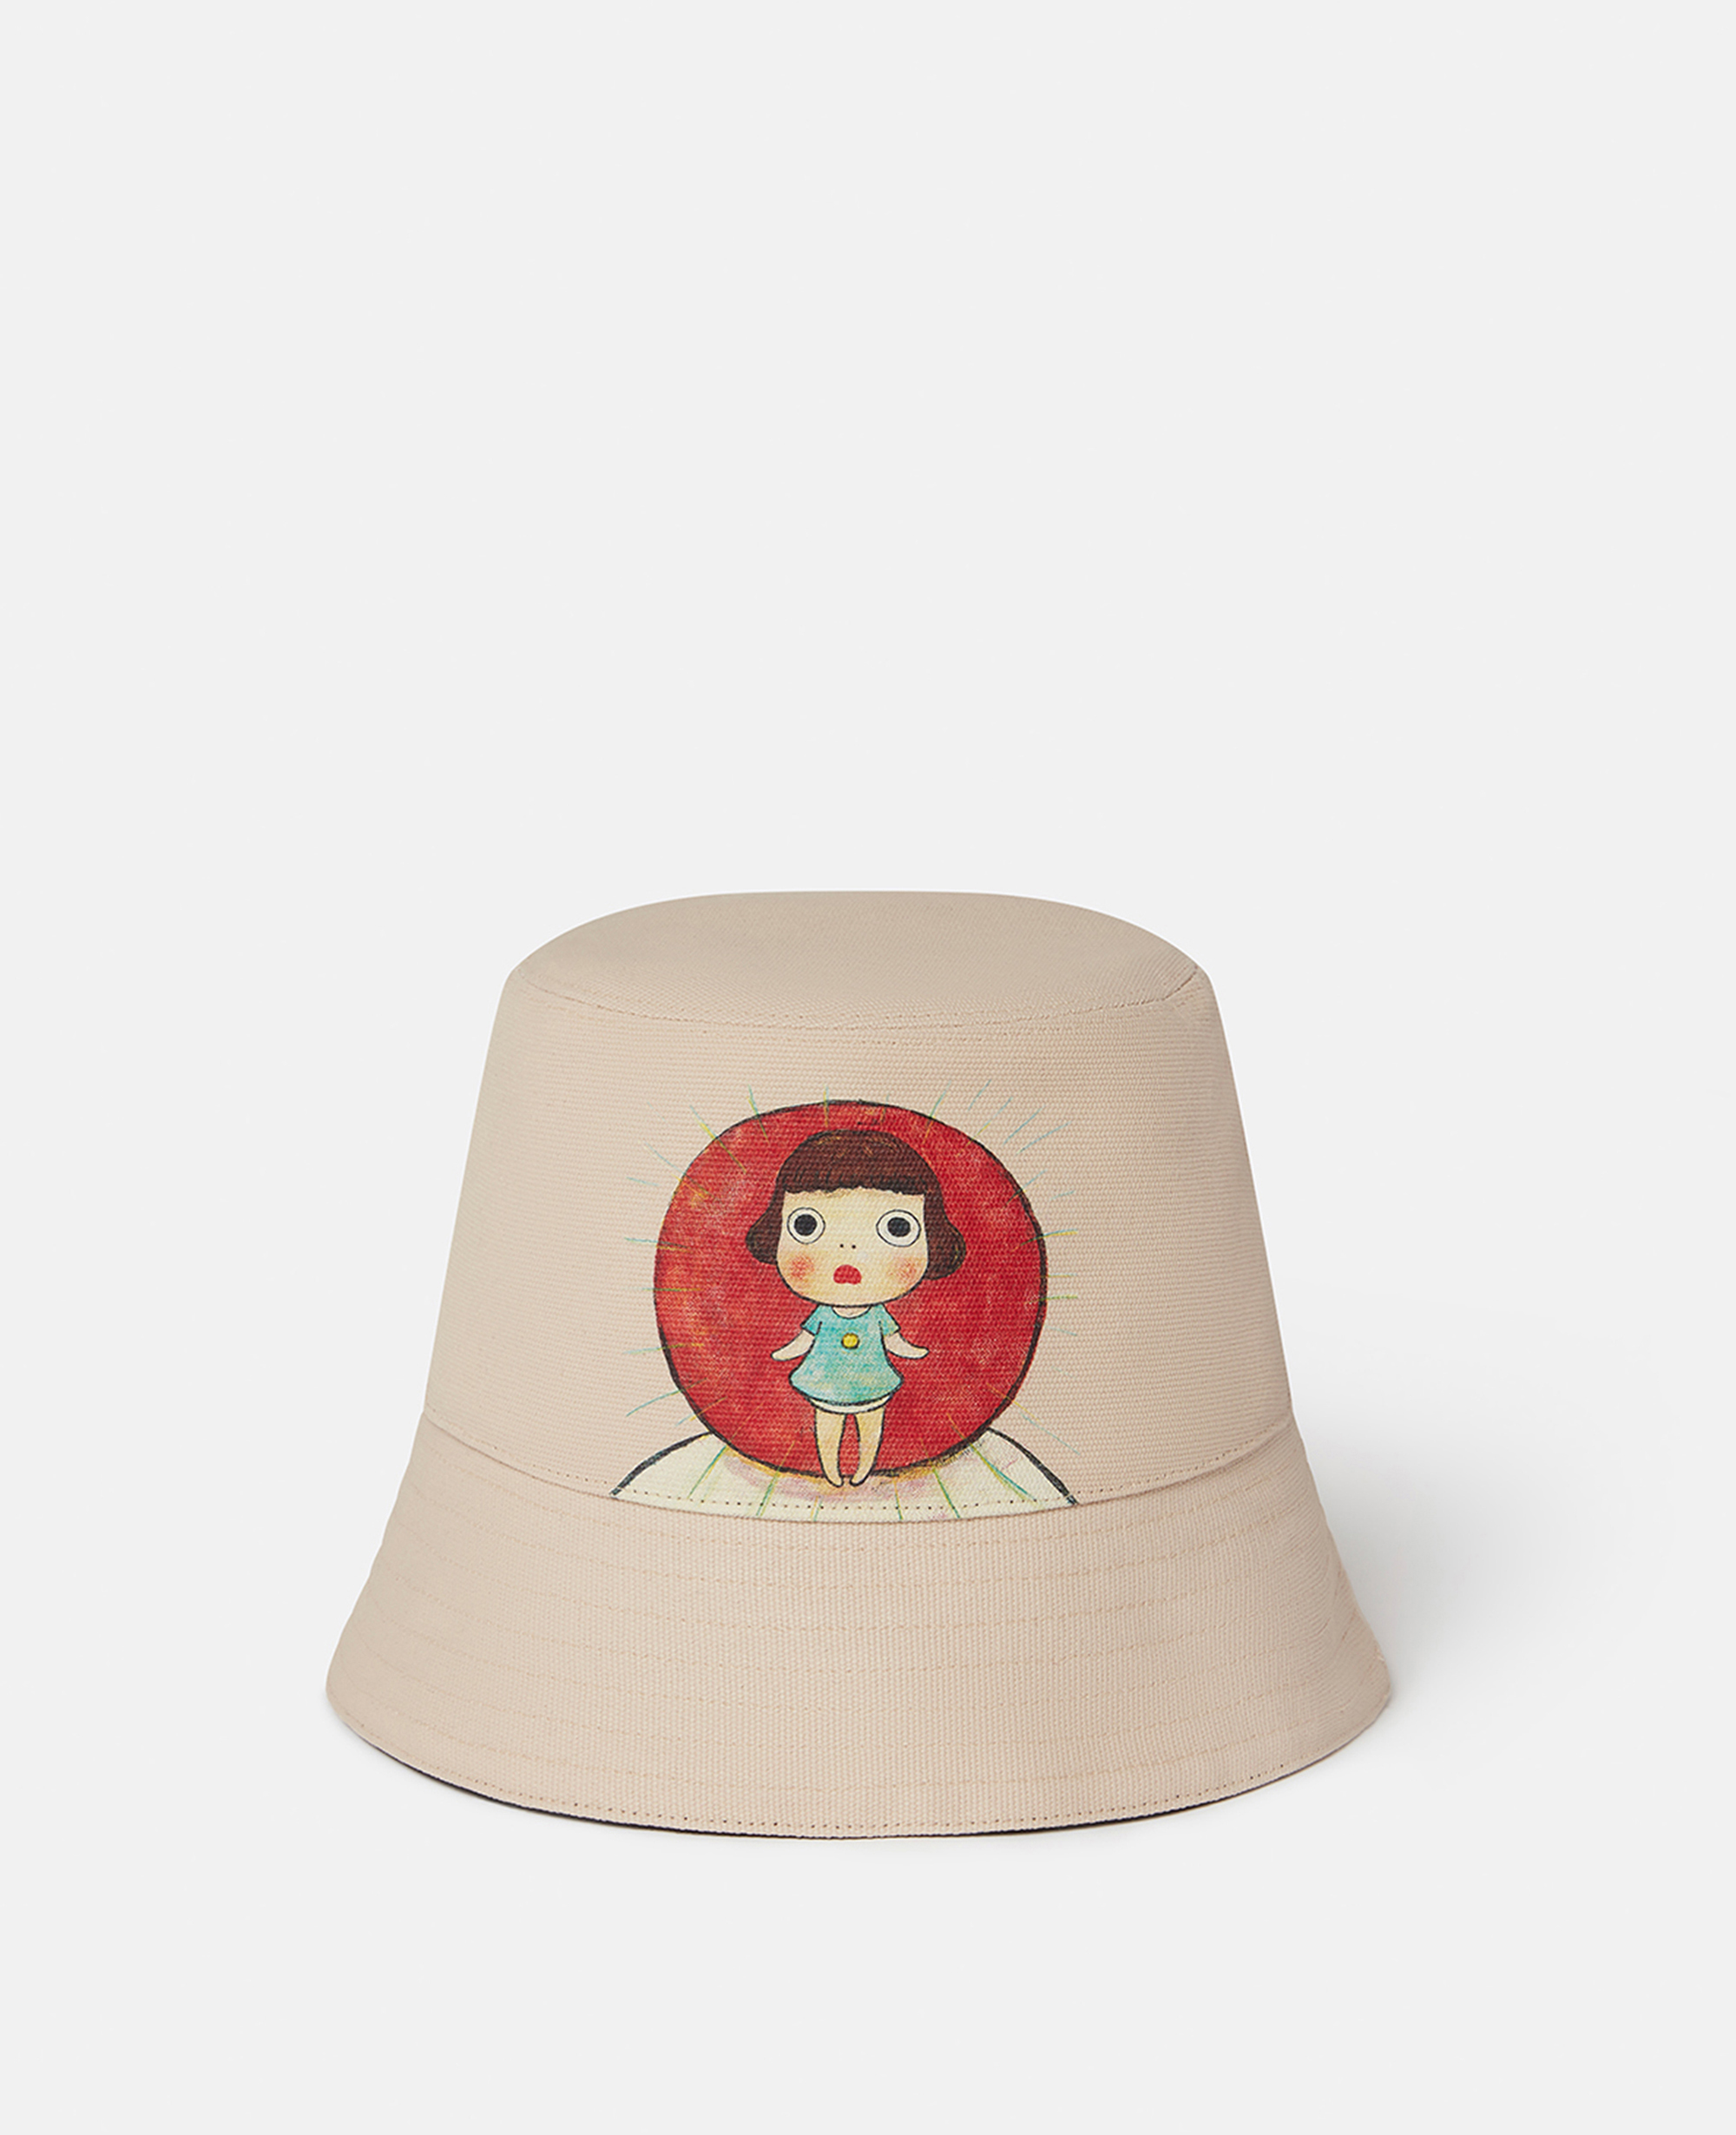 stella mccartney - sinister child print bucket hat, woman, oat, size: 56